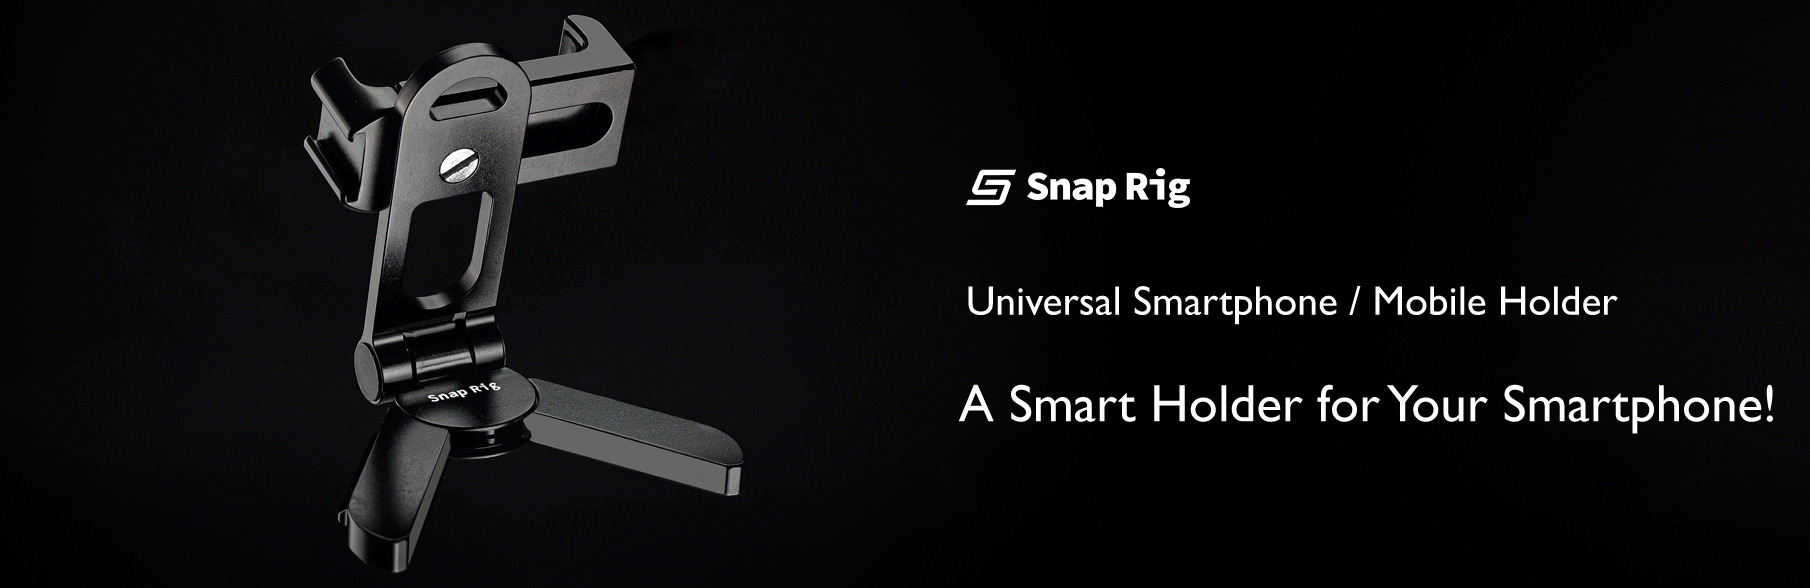 Proaim SnapRig Universal Smartphone / Mobile Holder. MA212.